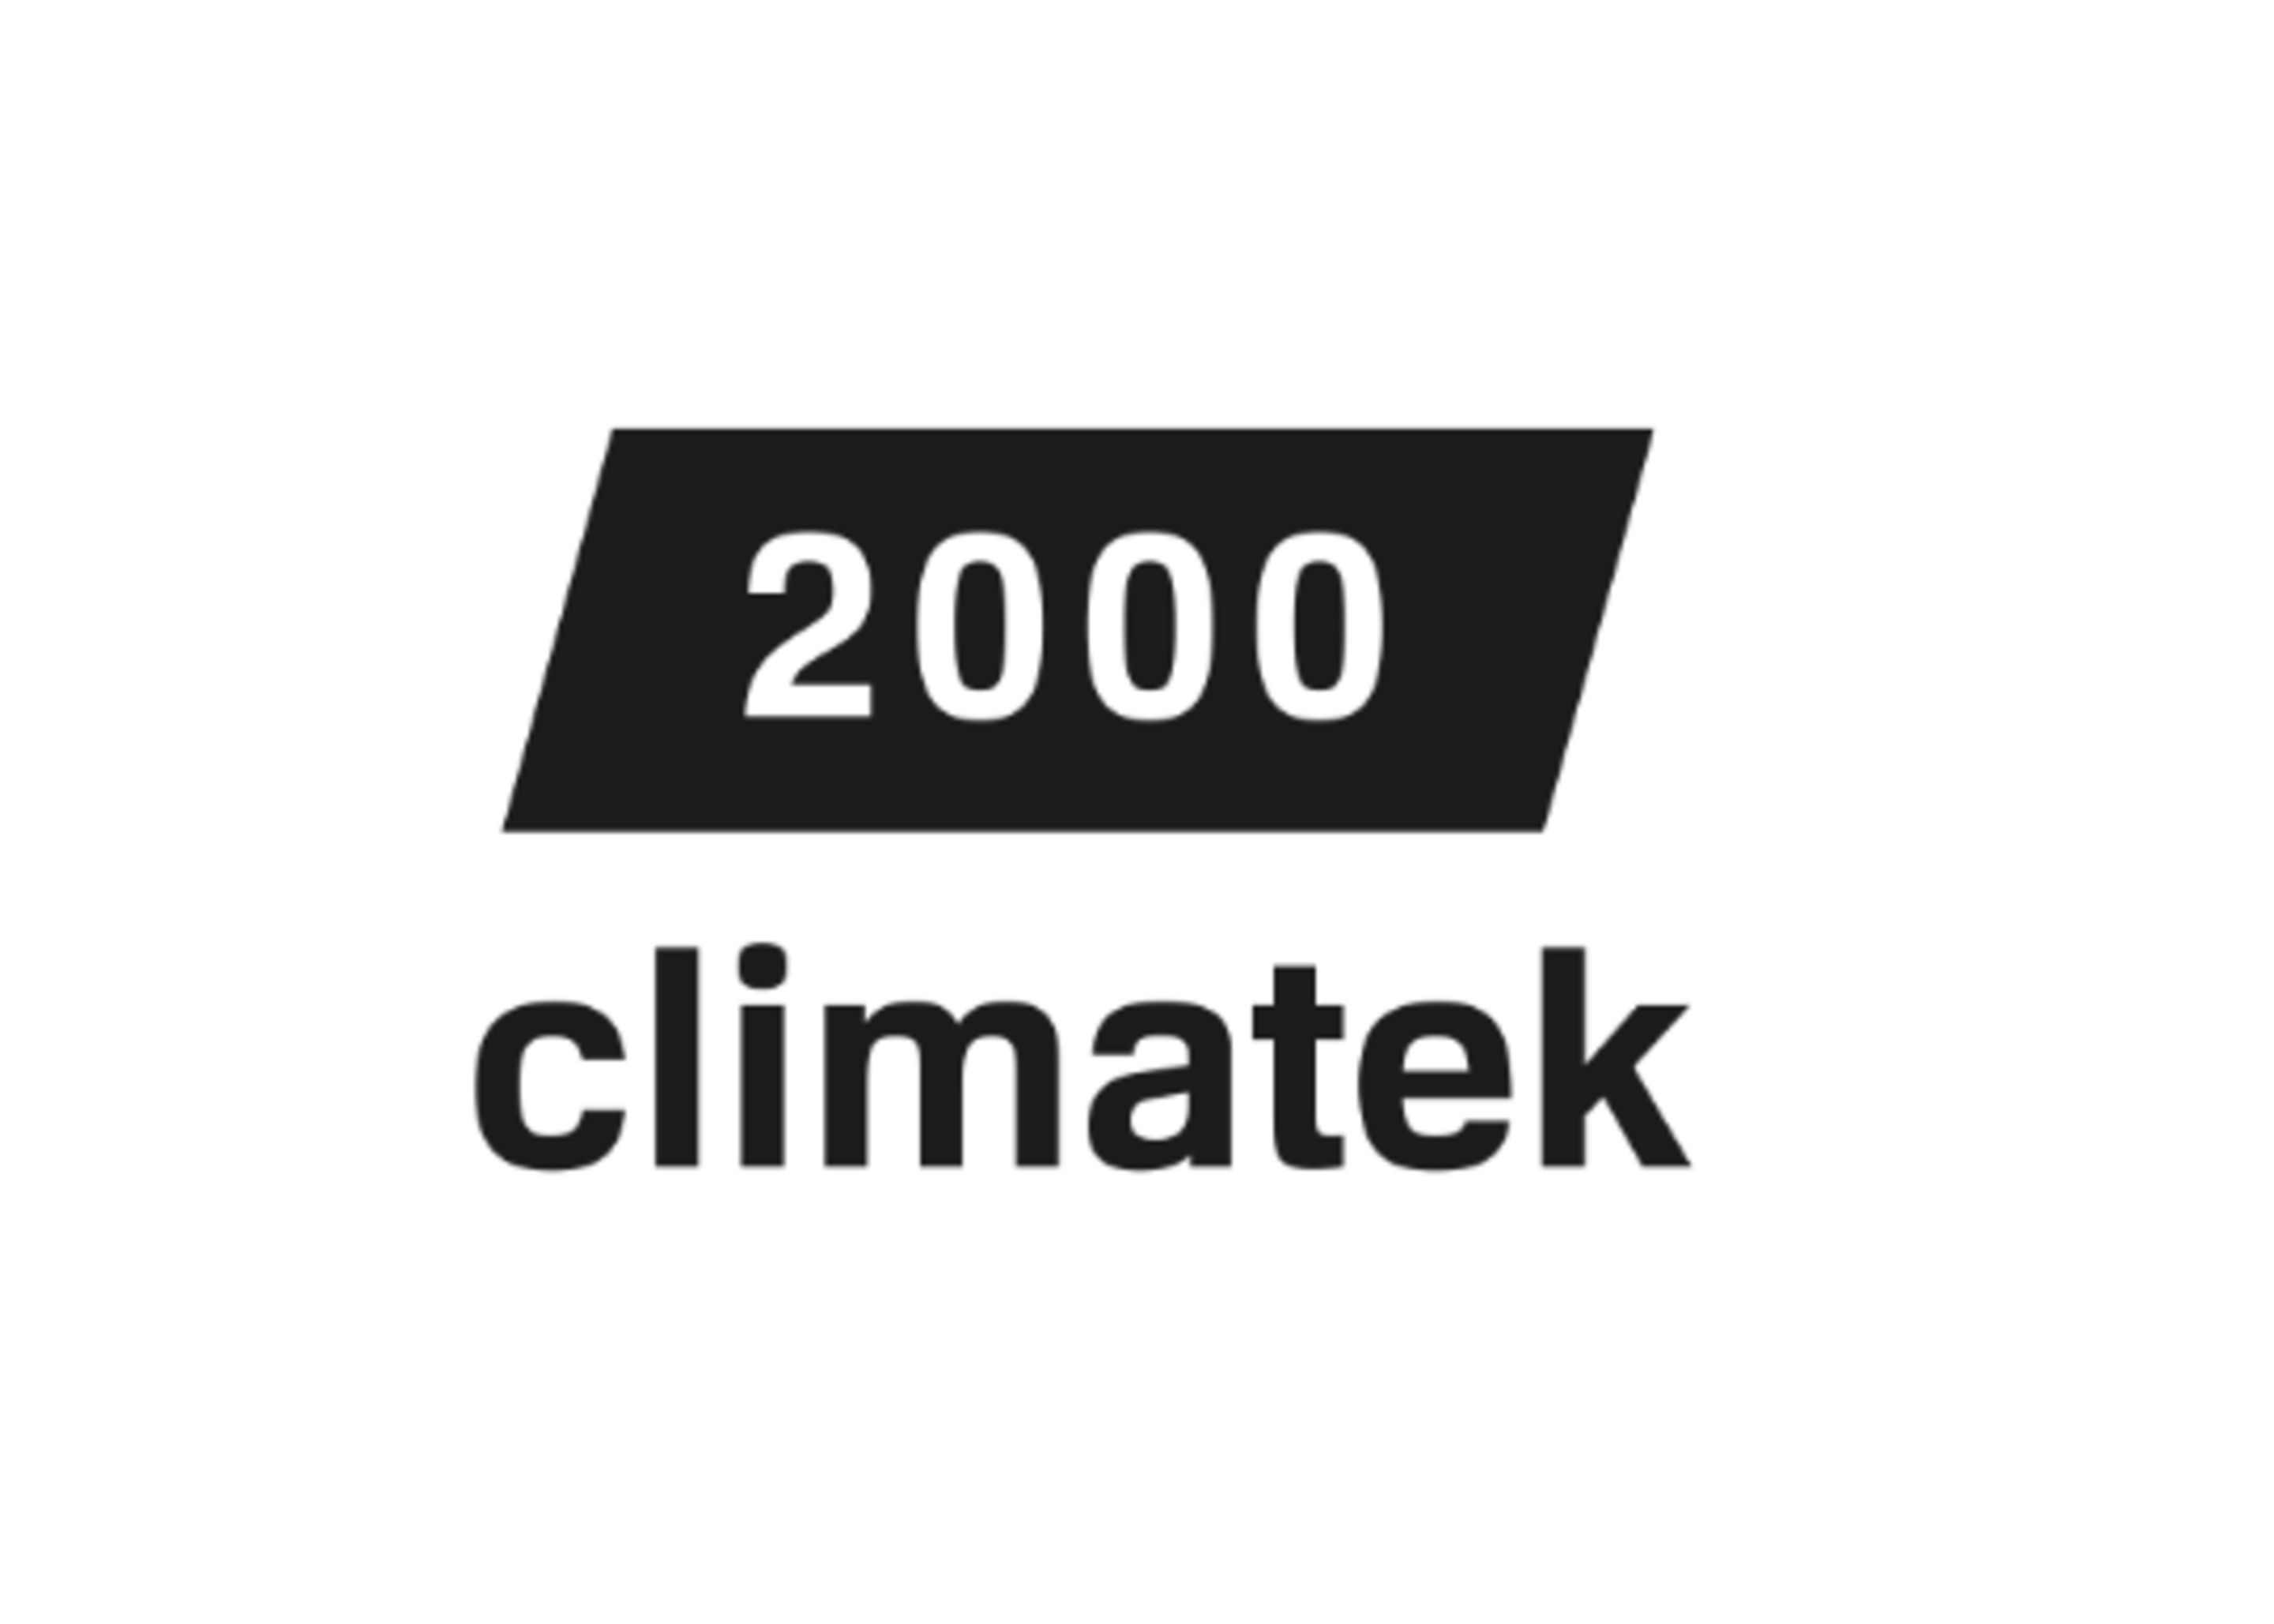 Climateck - 2000